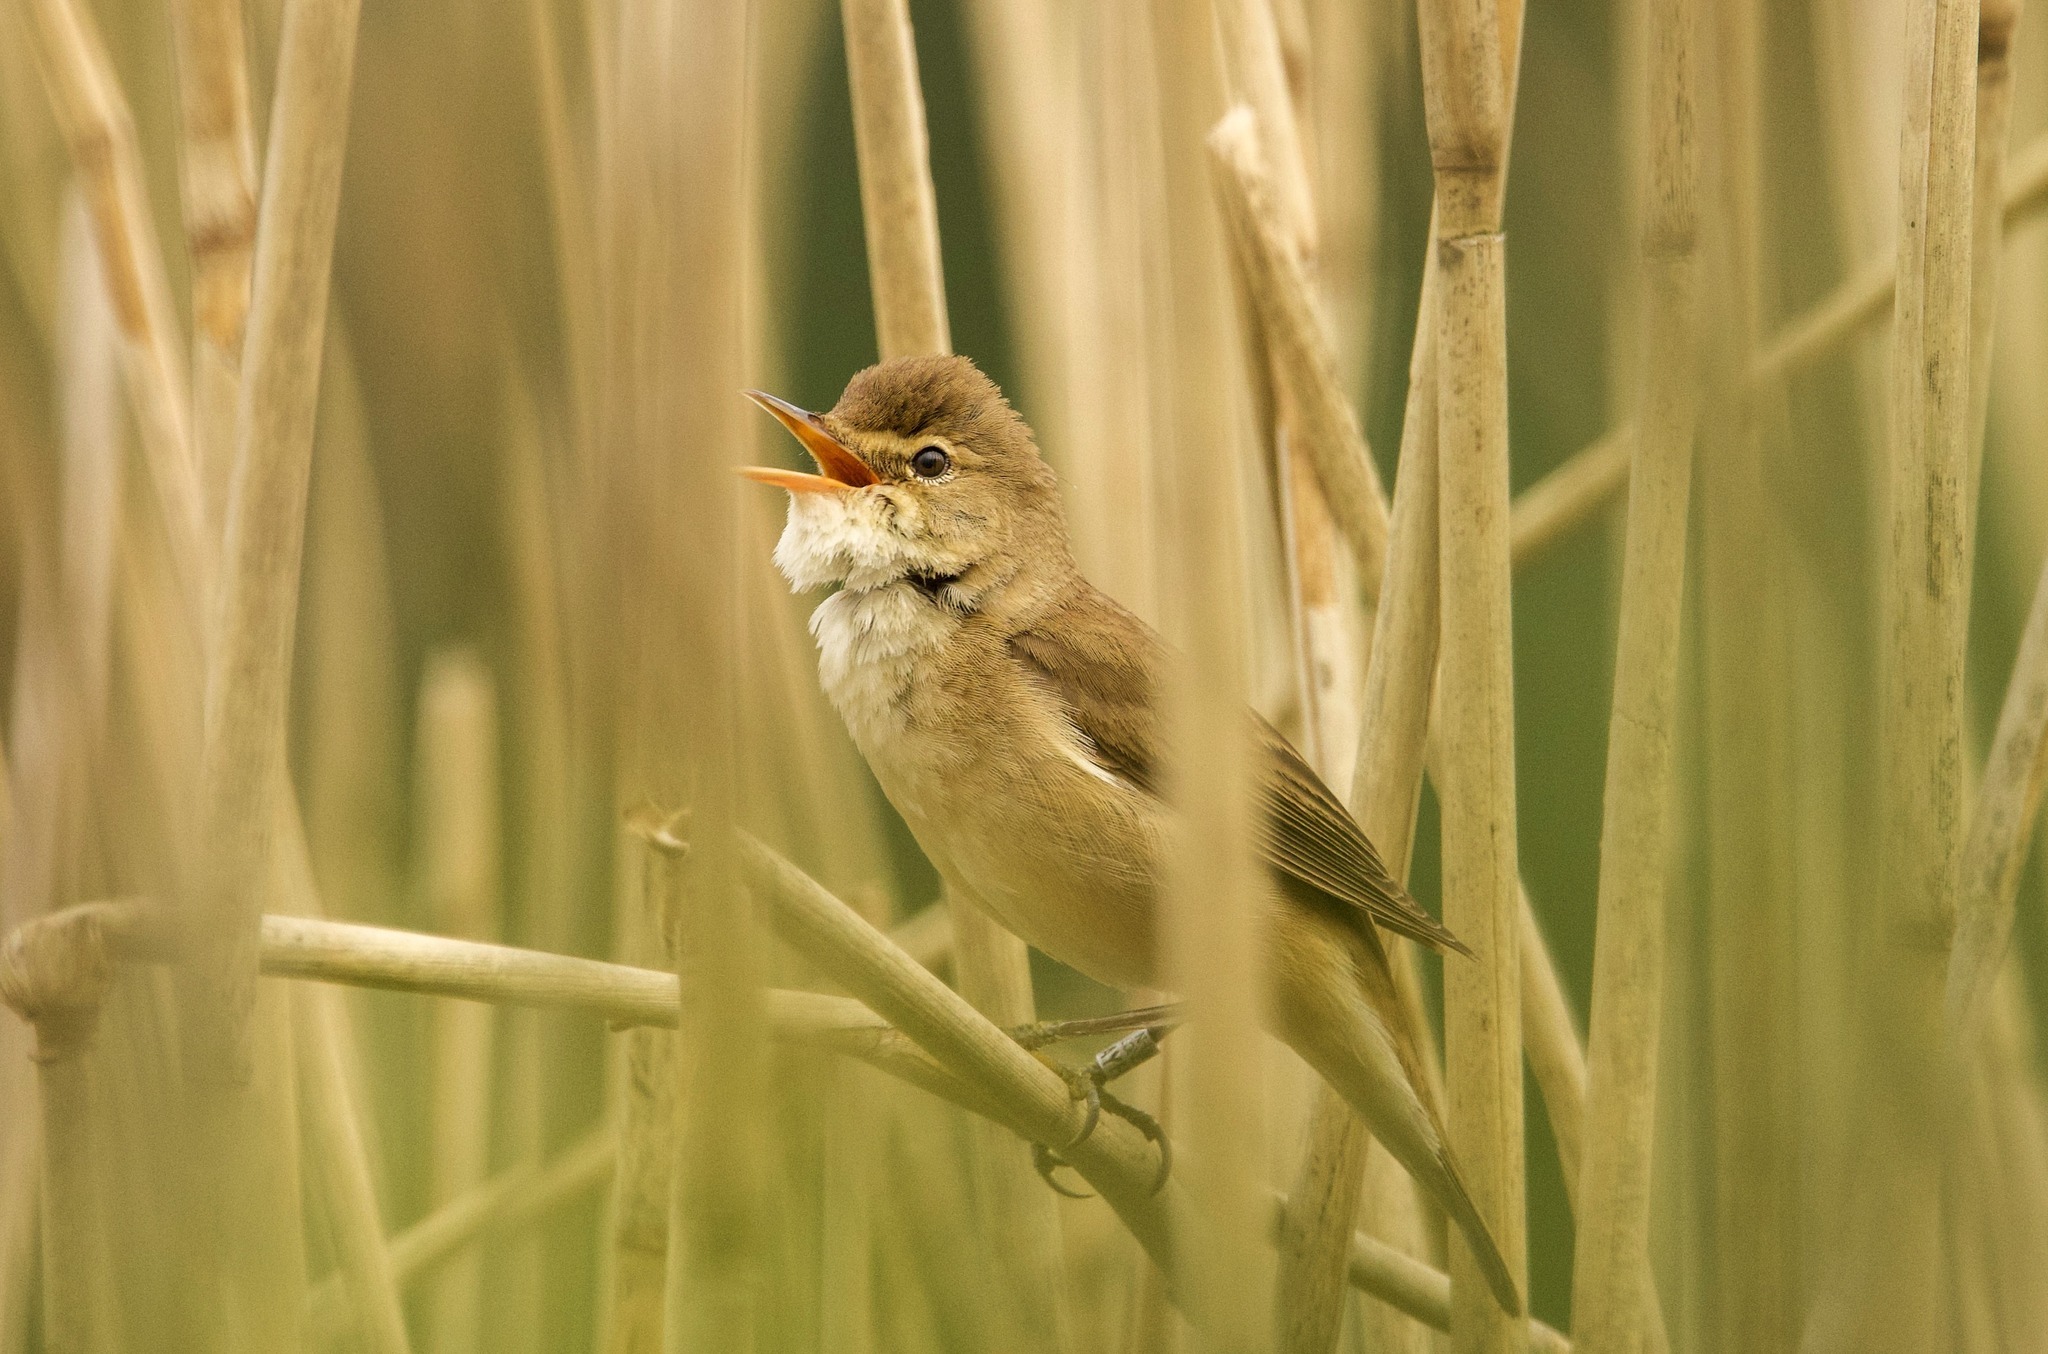 Singing reed warbler in Marston by Heather Wilde